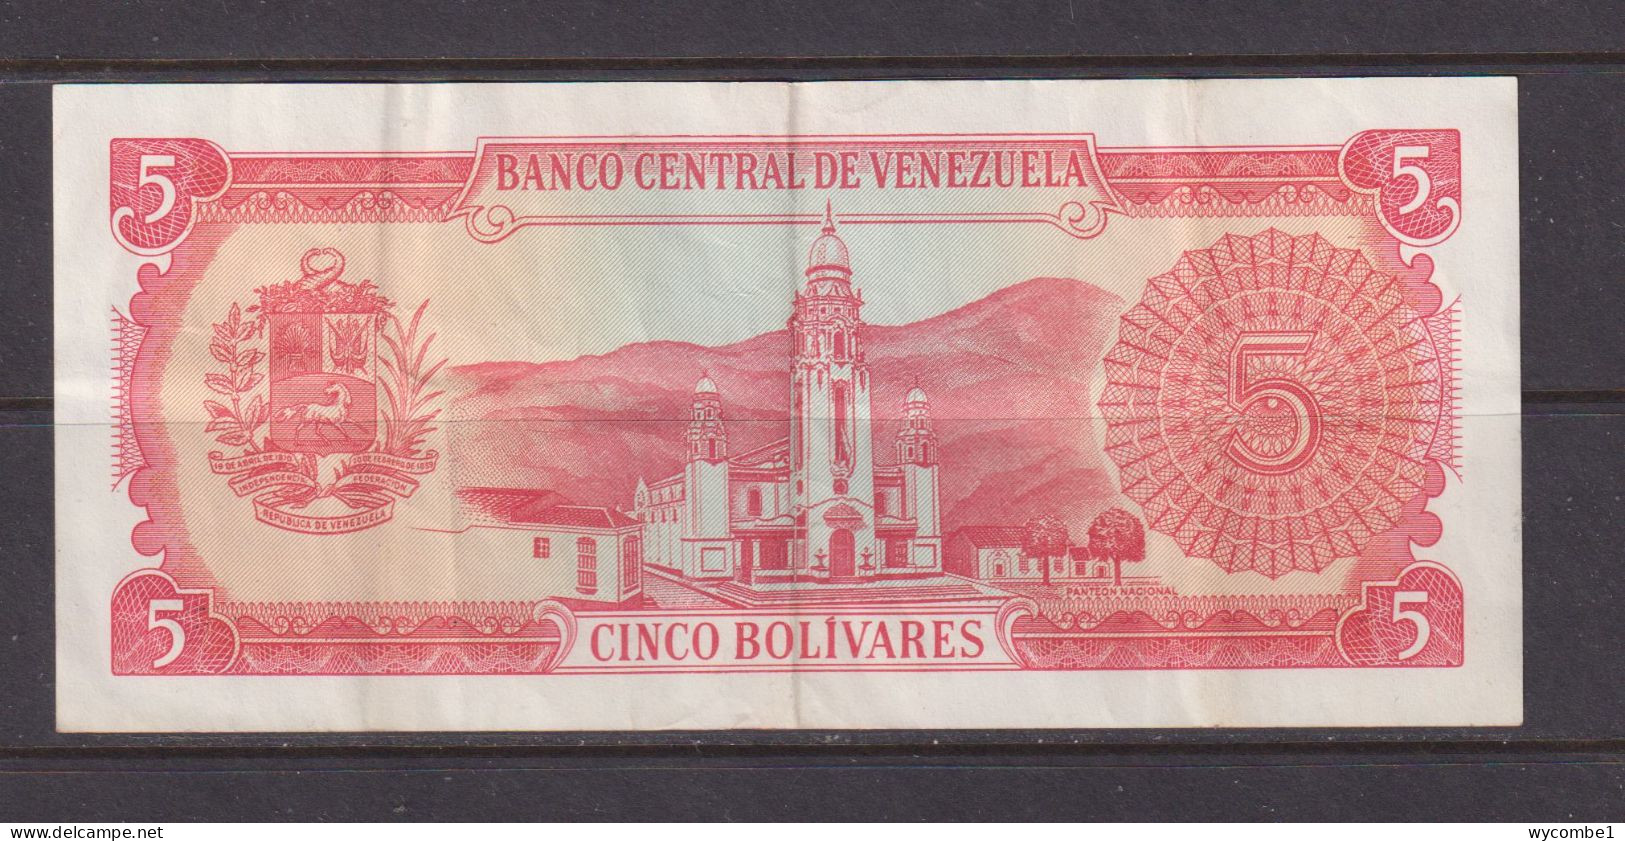 VENEZUELA -  1989 5 Bolivars Circulated  Banknote - Venezuela